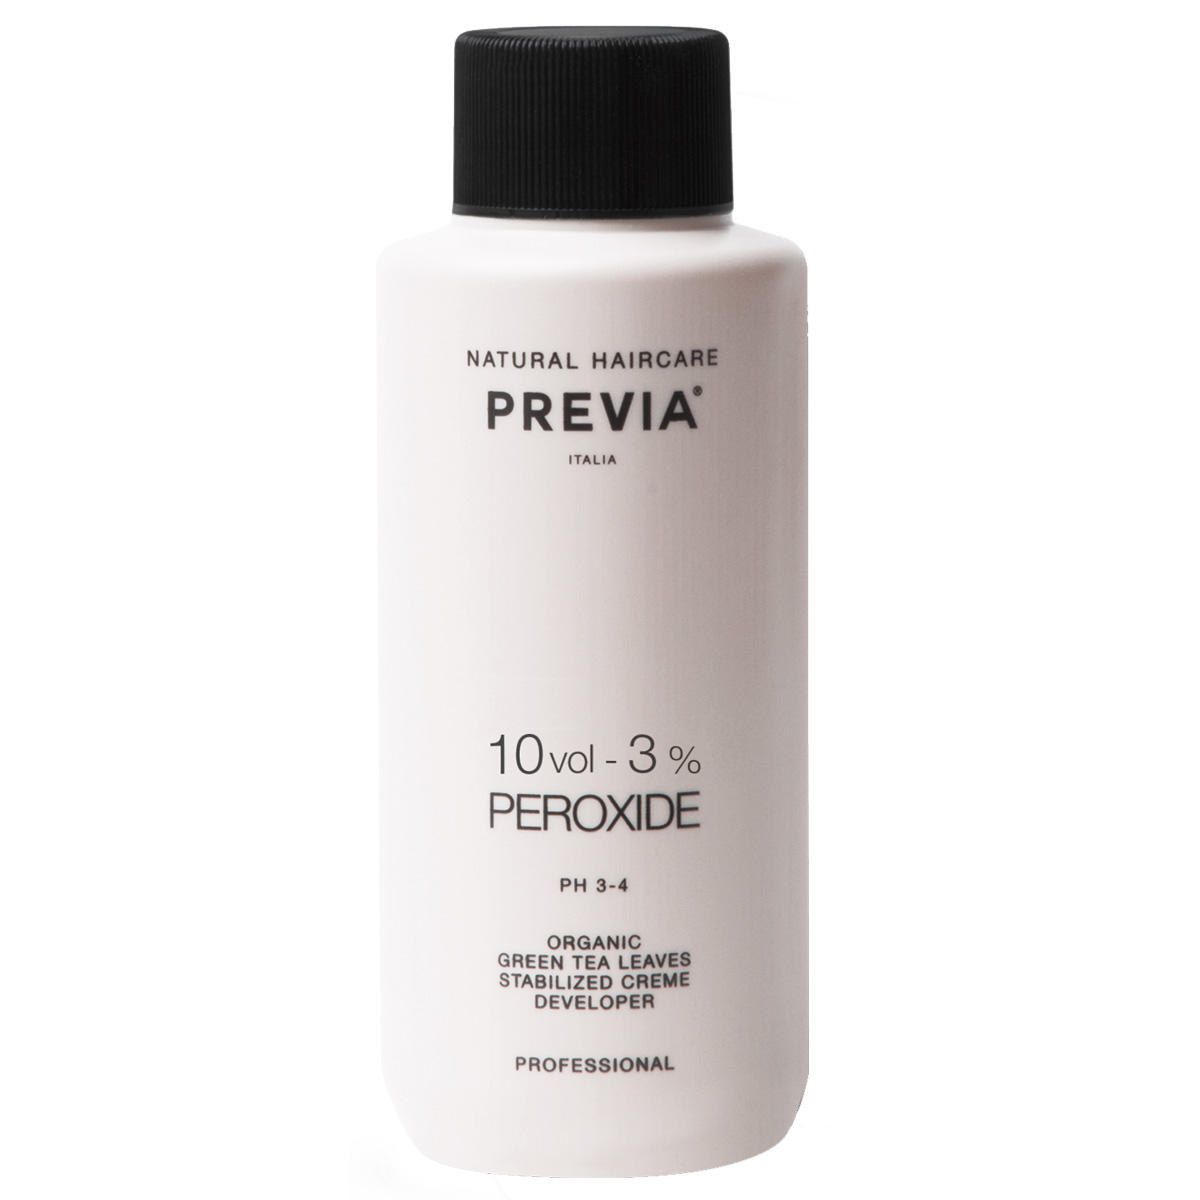 PREVIA Stabilized Creme Peroxide 3 % - 10 Vol., 150 ml